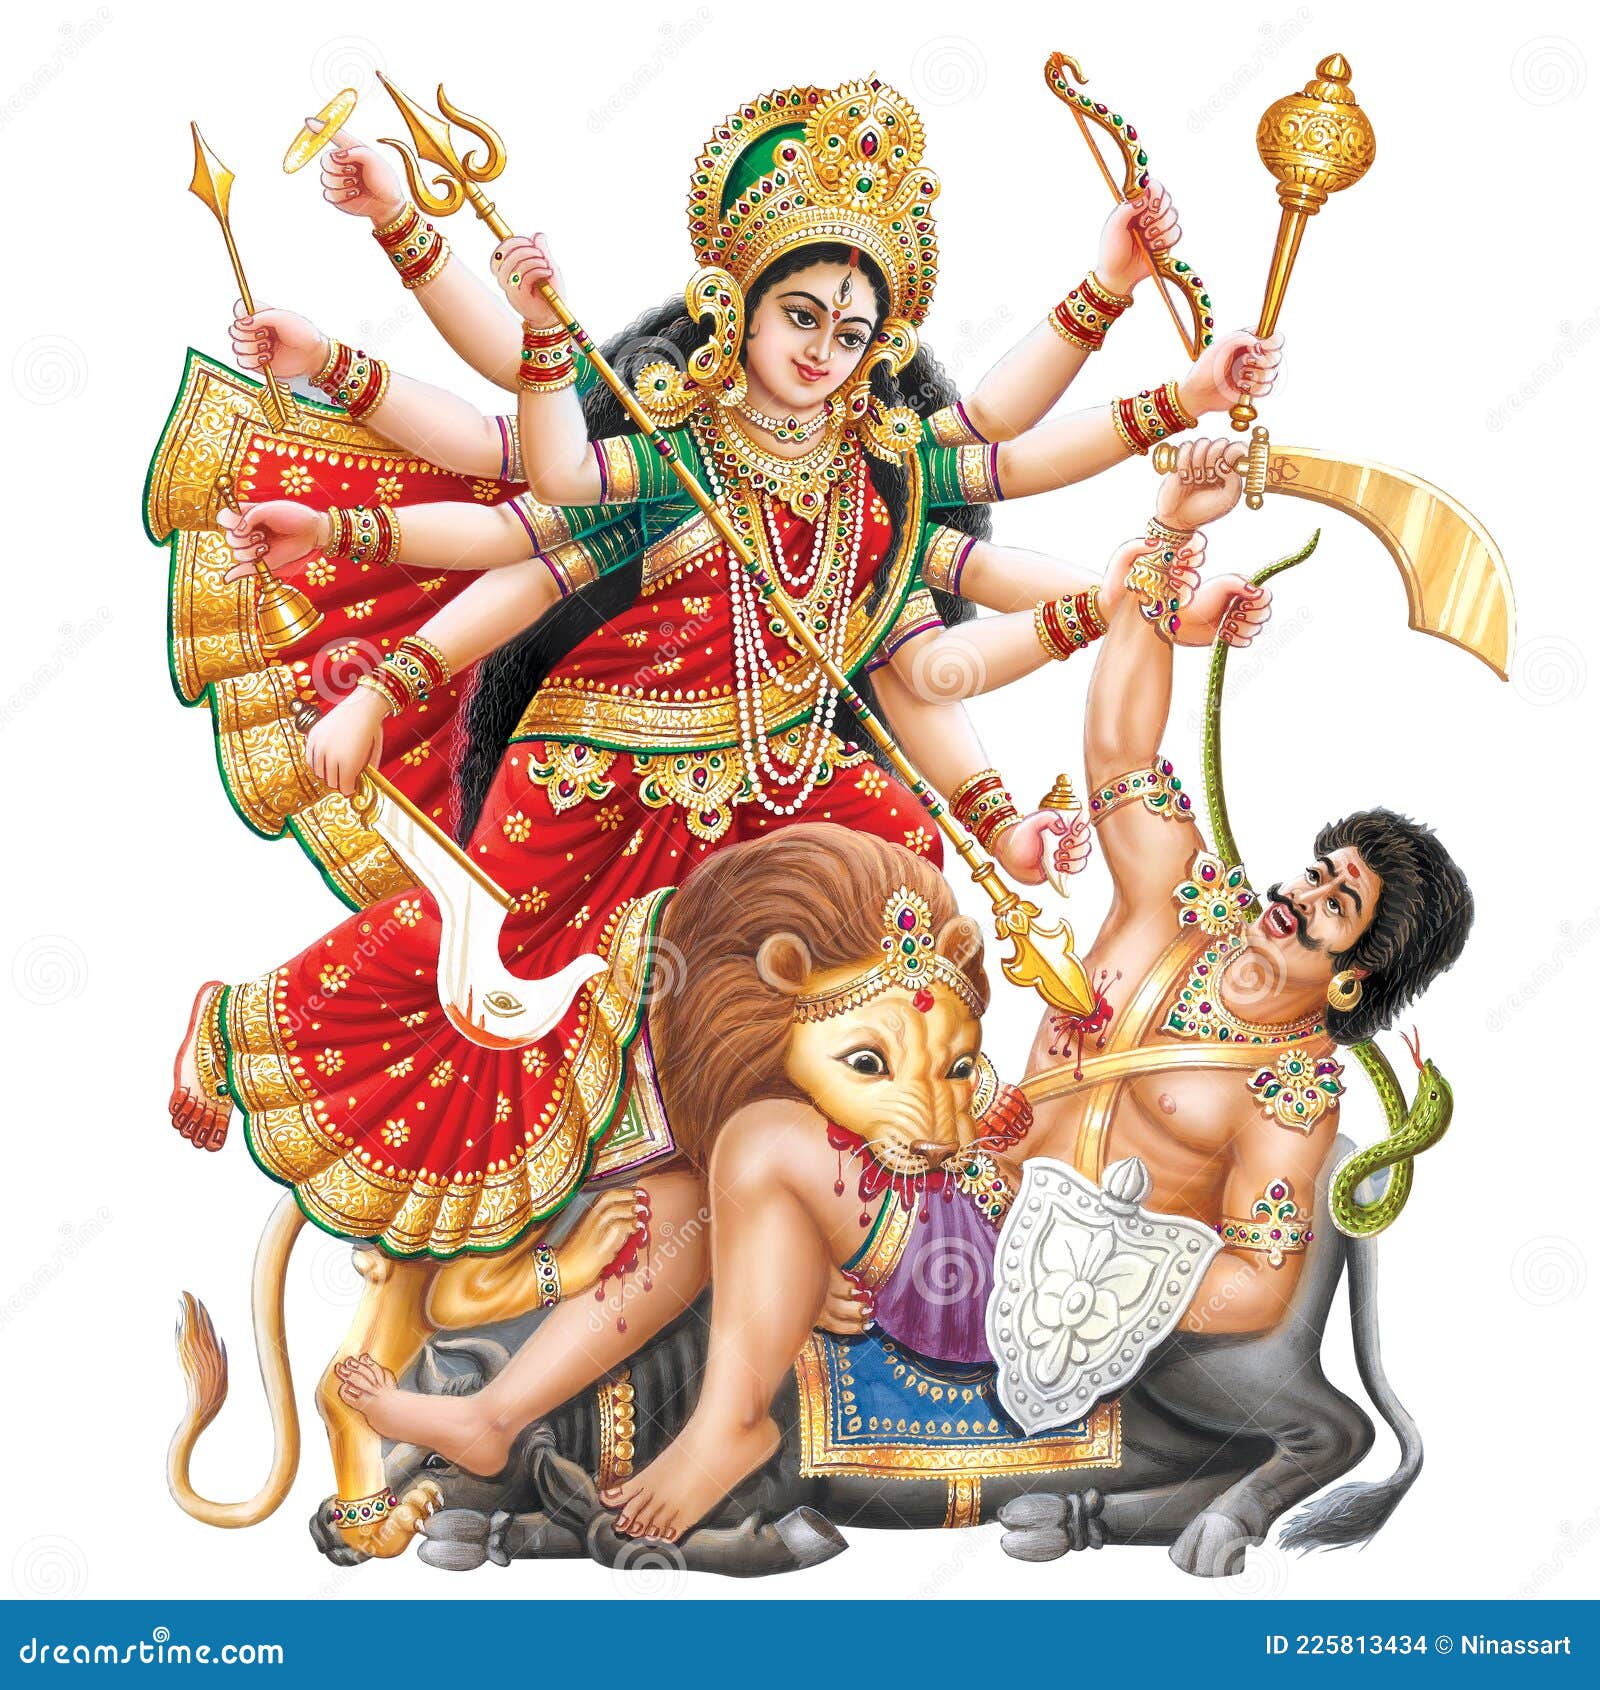 God Durga Images - Free Download on Freepik